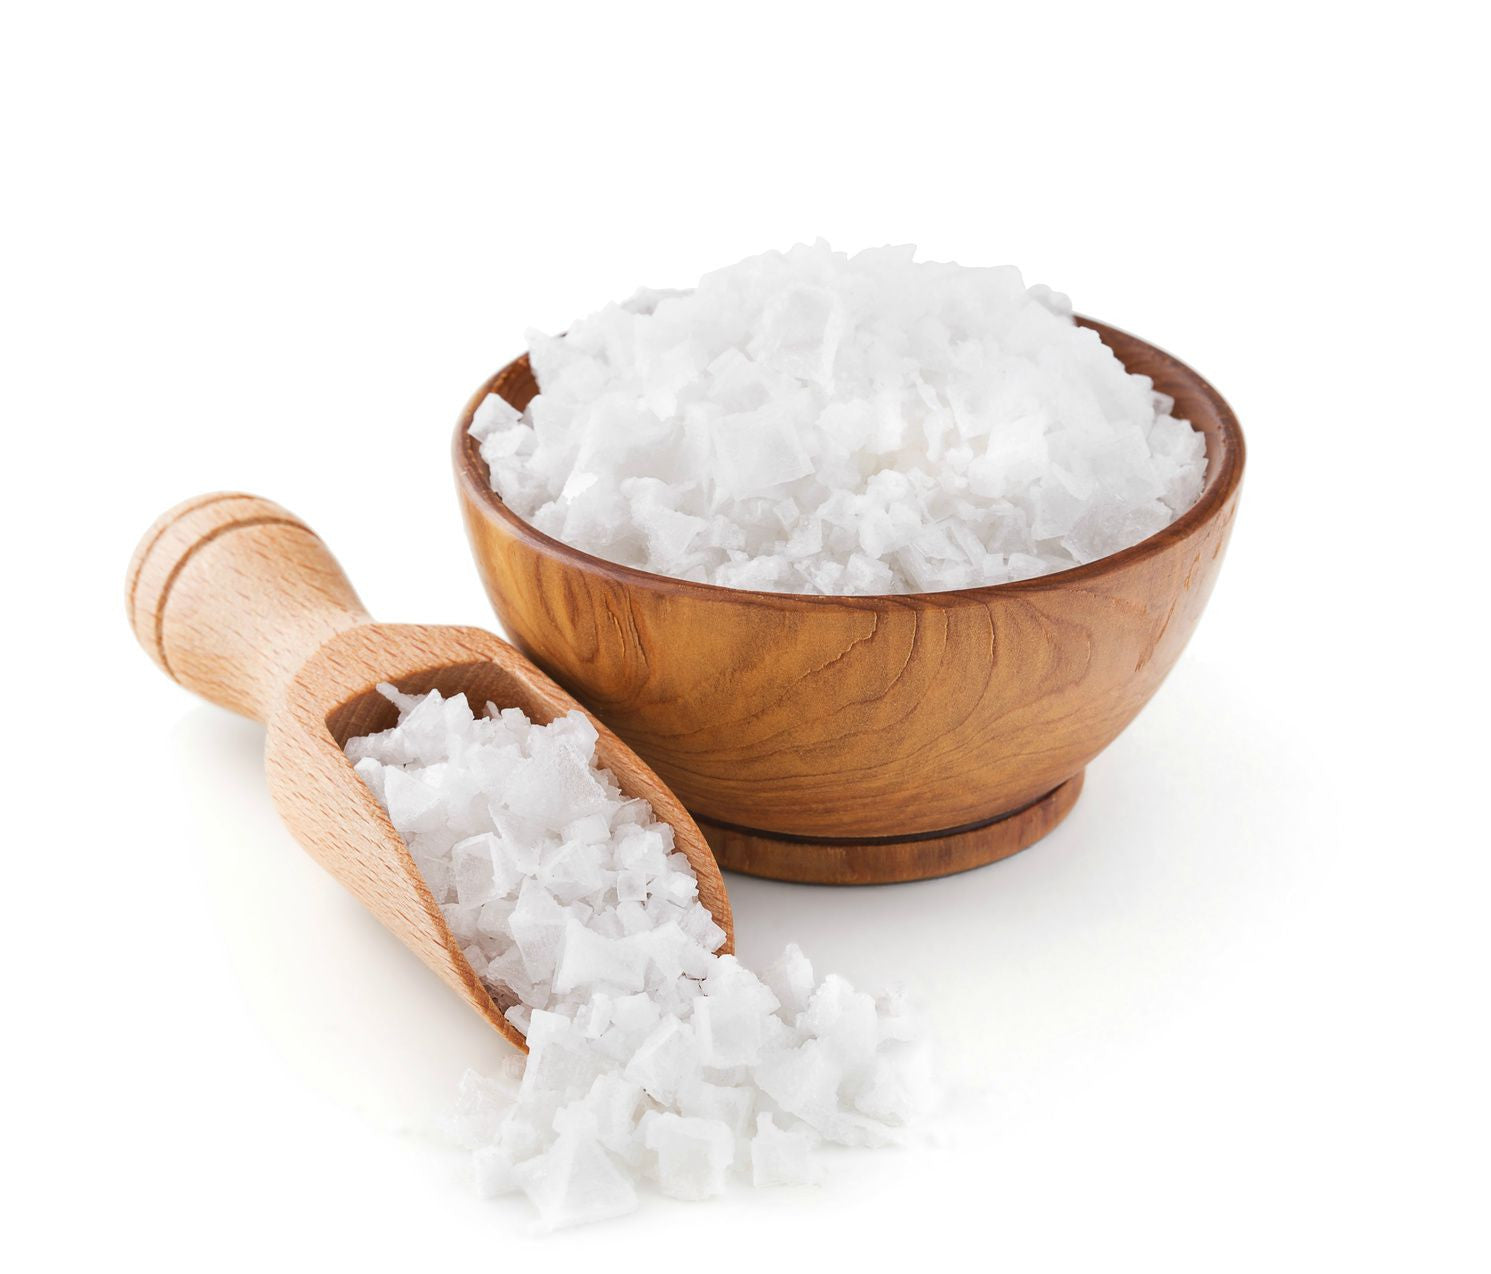 Cyprus White Flake Salt per oz Bulk